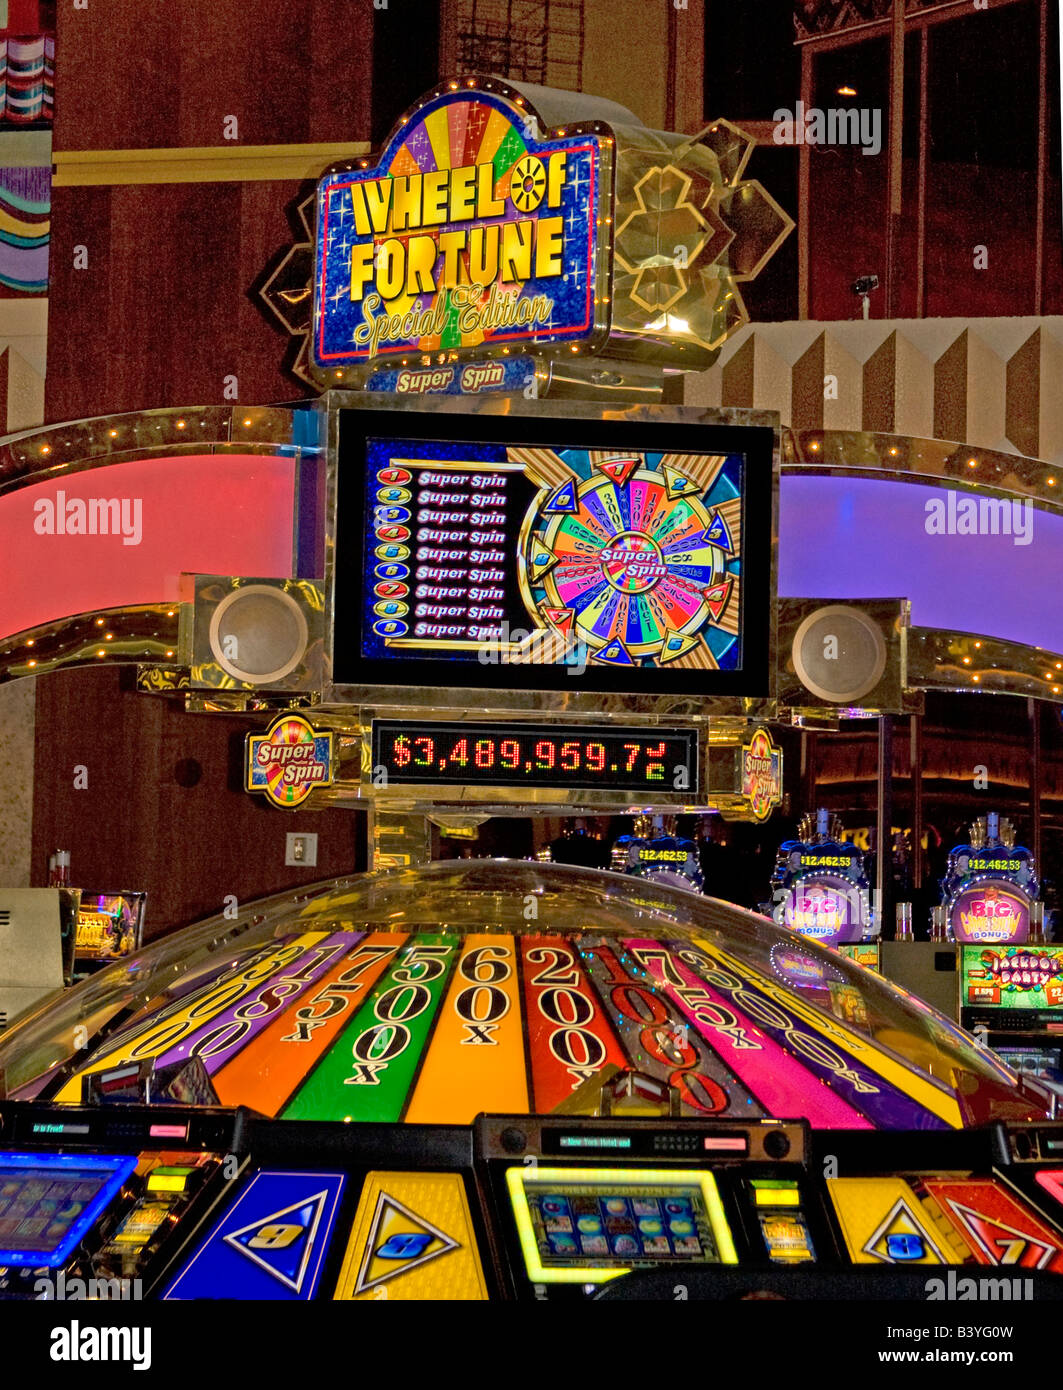 USA Las Vegas Colorful Wheel of Fortune progressive slot machine over$3million jackpot Stock Photo